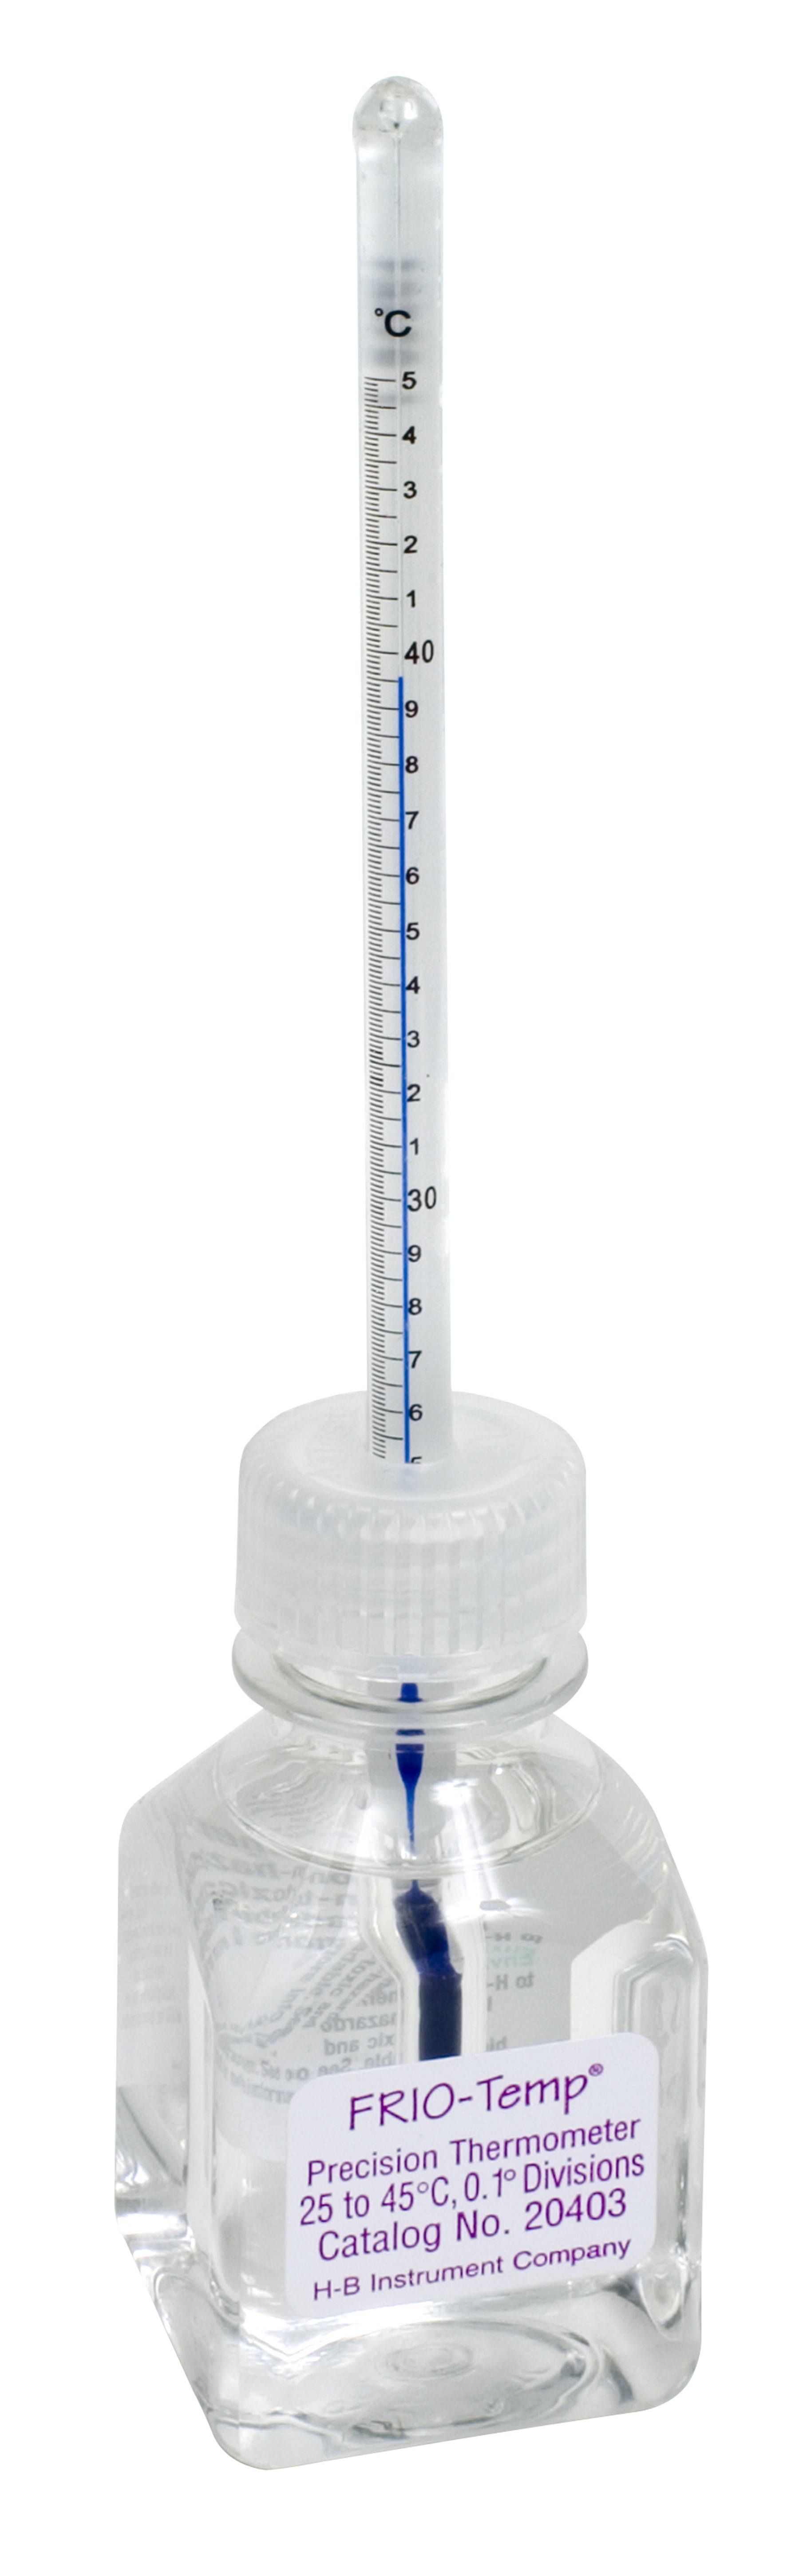 Oil thermometer oil temperature meter JMP BH12-0306 buy online in